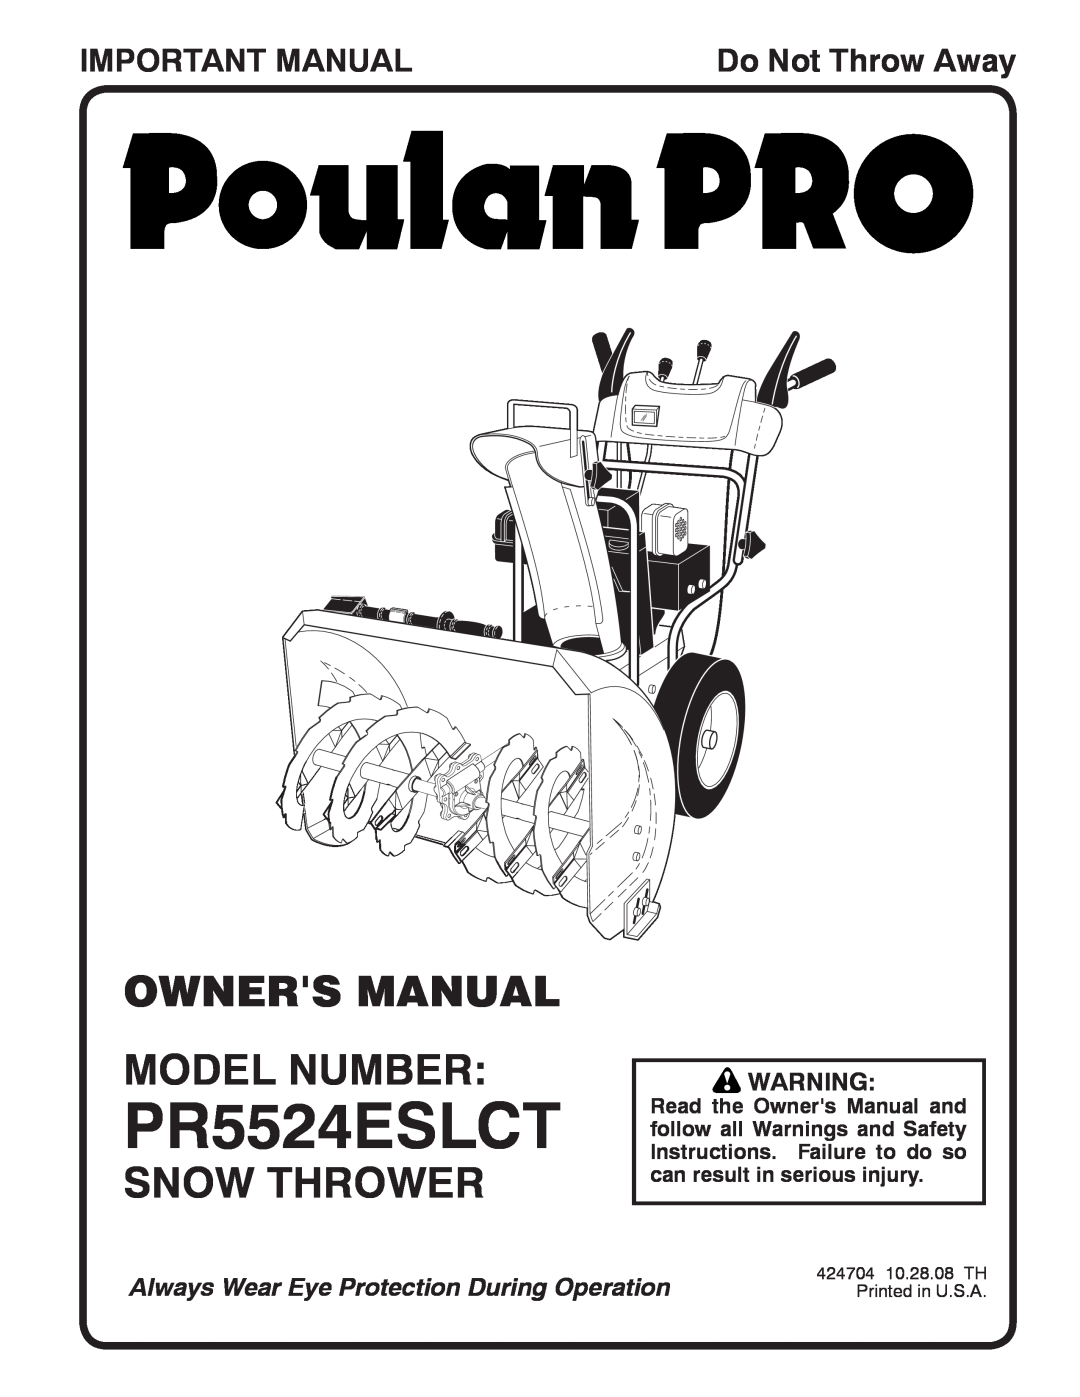 Poulan PR5524ESLCT, 424704 owner manual Snow Thrower, Important Manual, Do Not Throw Away 